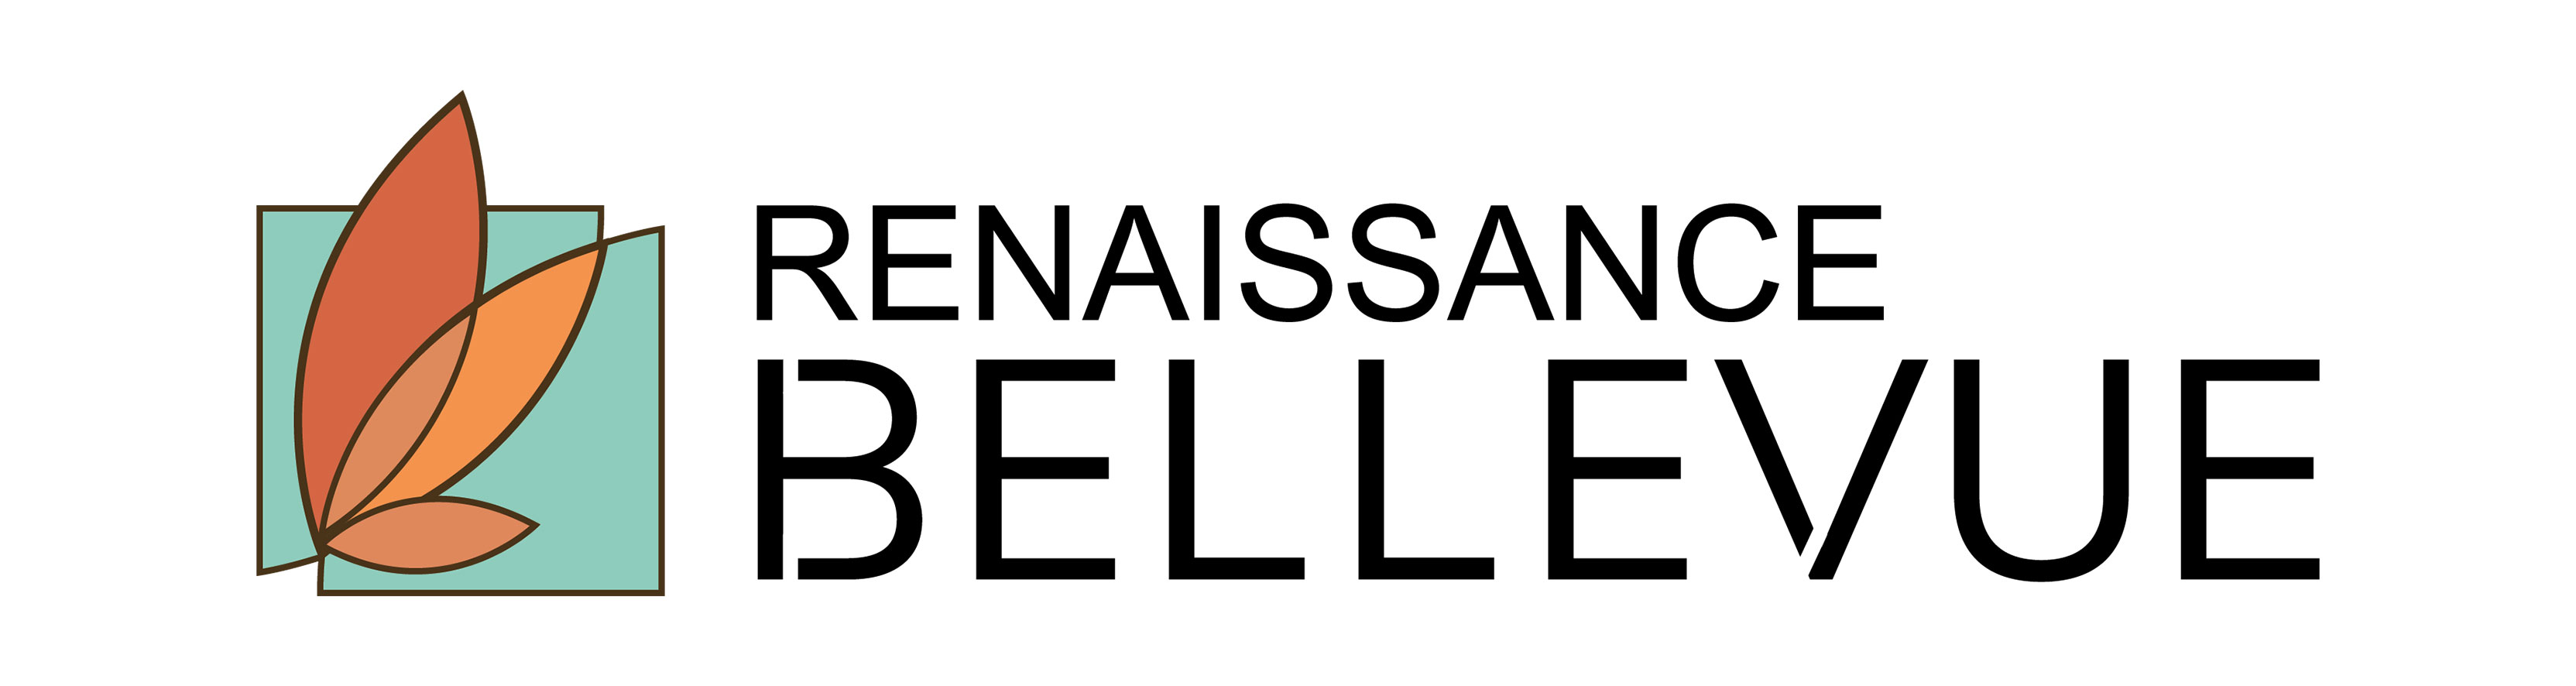 Renaissance Bellevue Logo